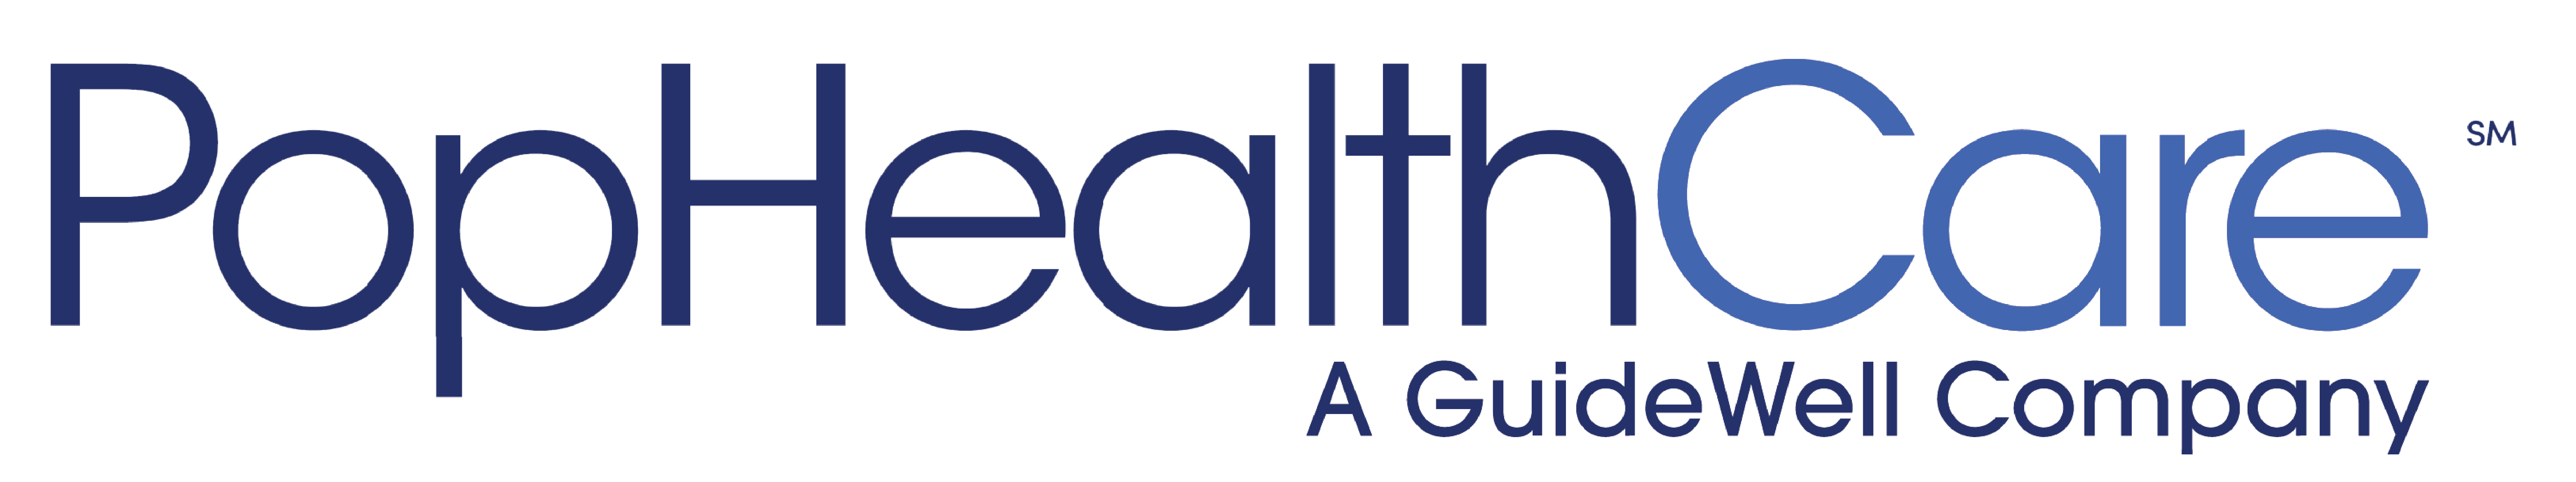 PopHealthCare logo